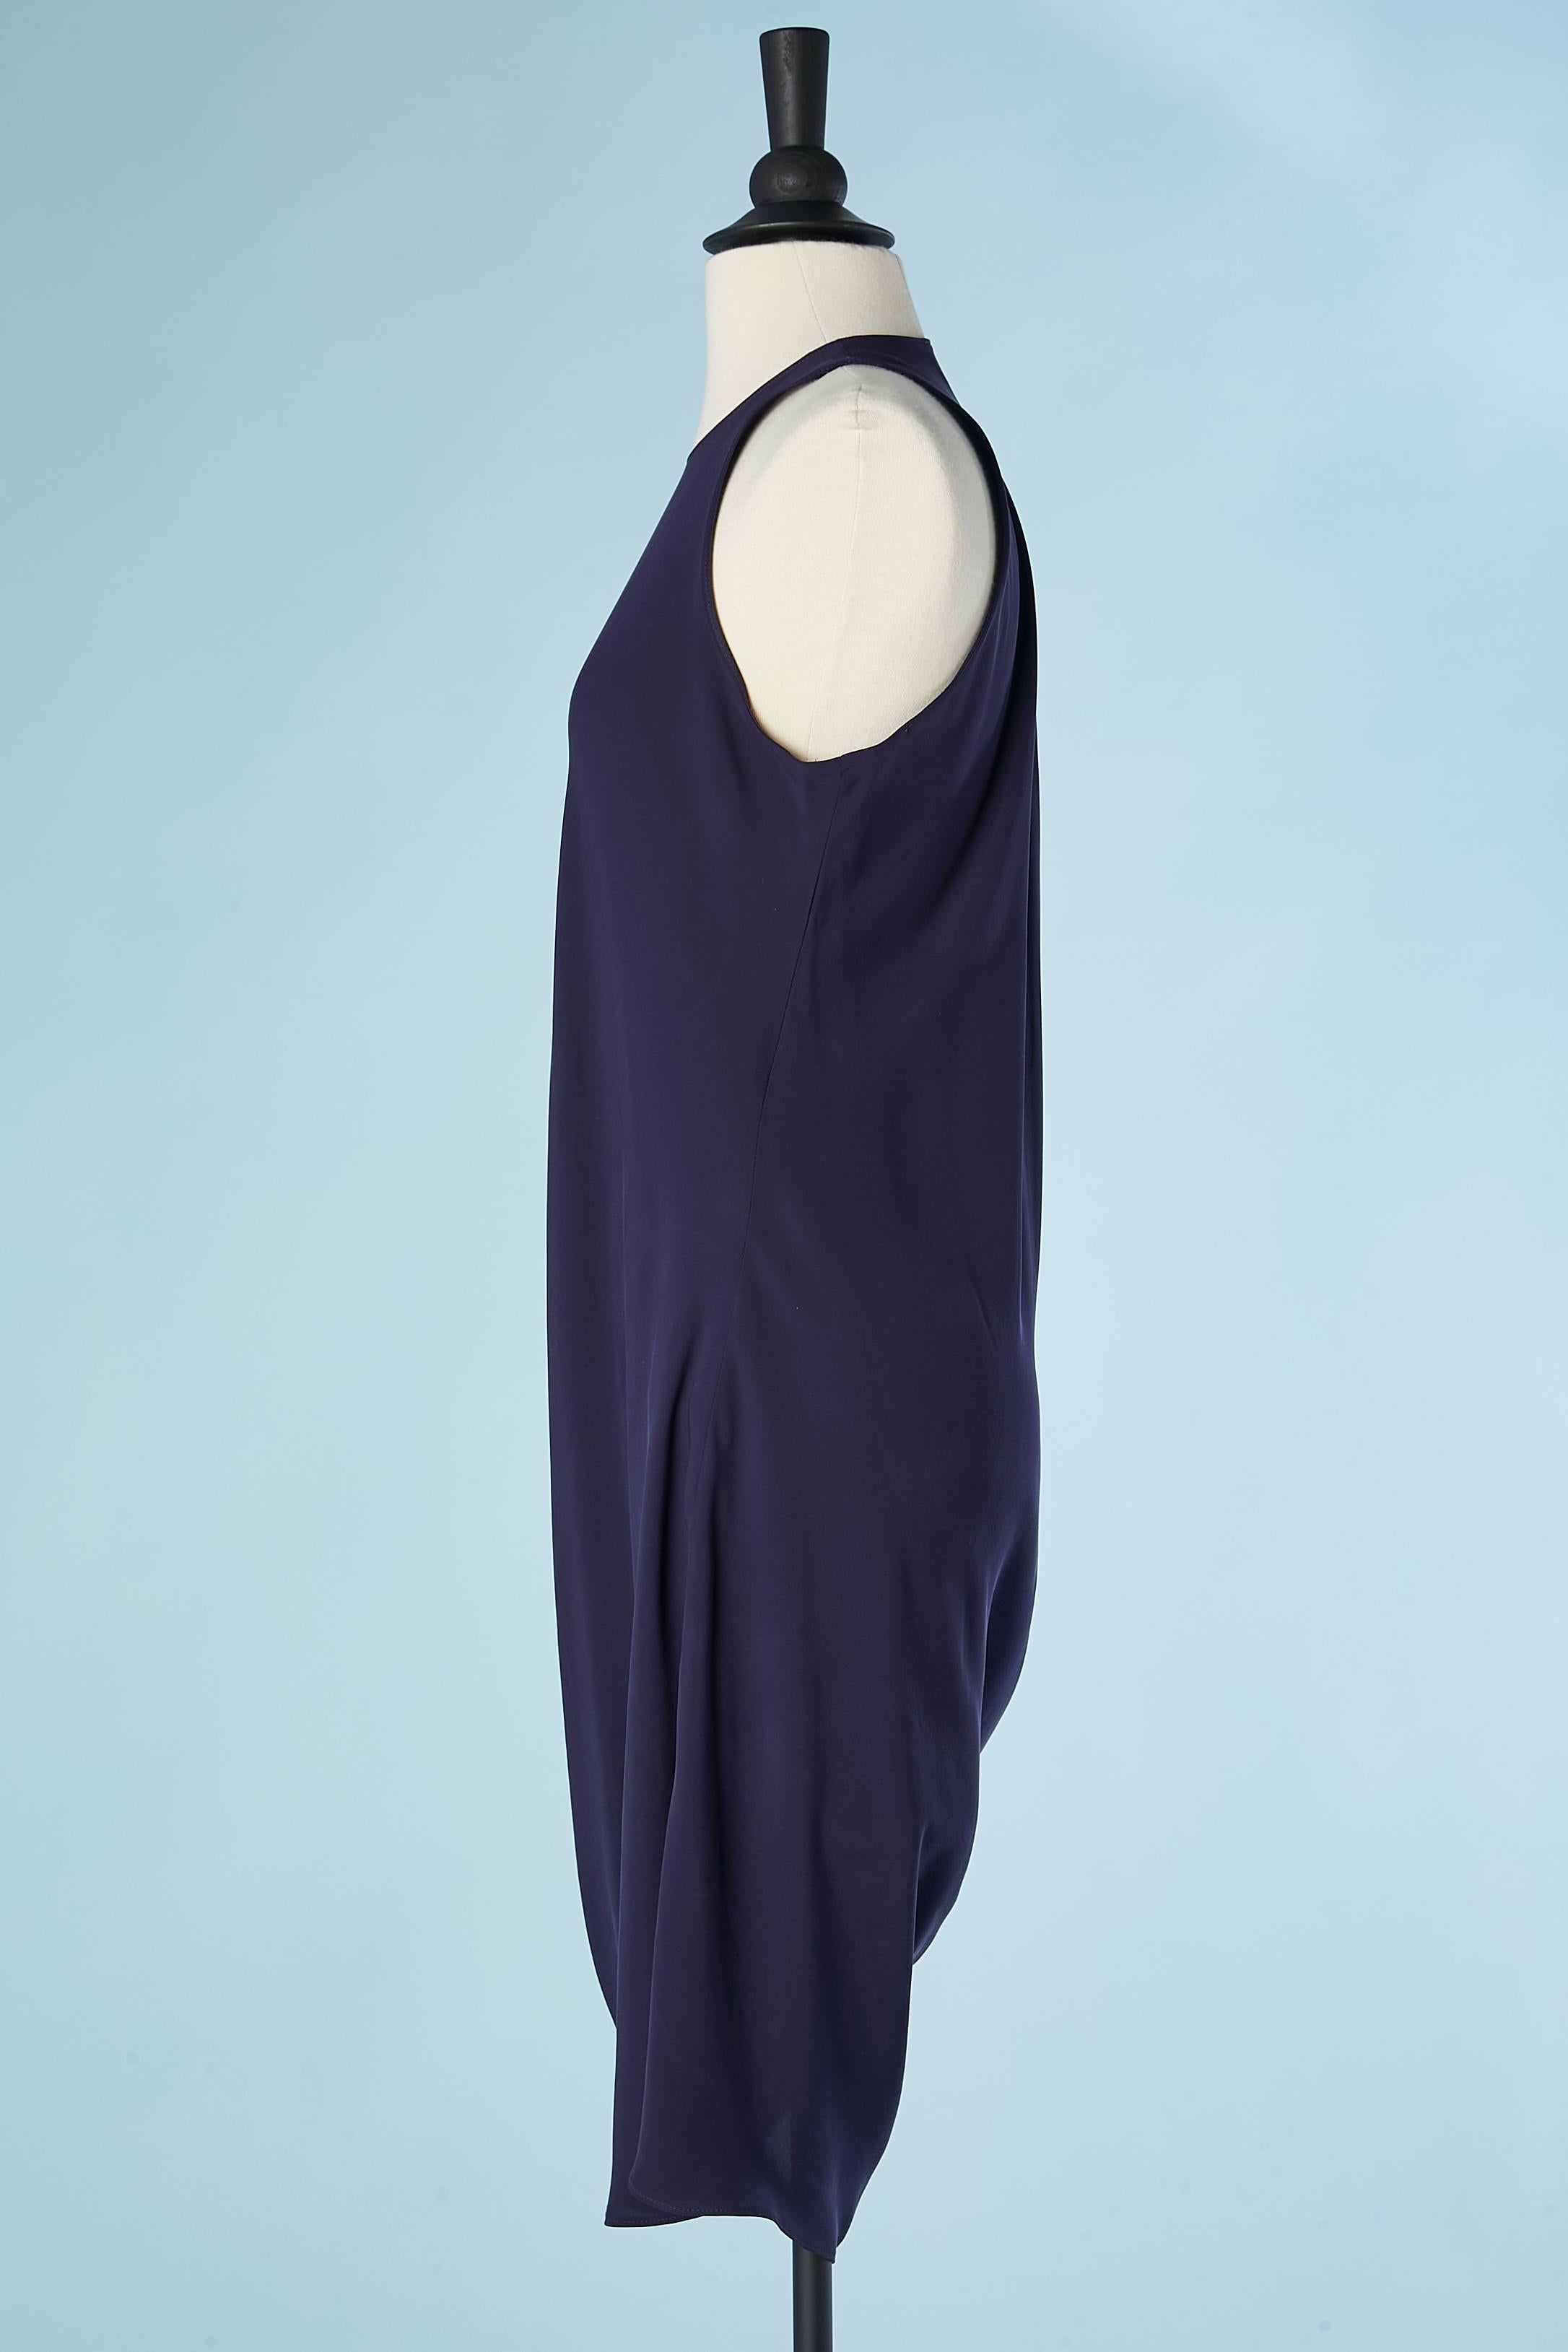 Women's Asymmetrical navy blue silk cocktail dress Lanvin by Alber Elbaz SS 2012